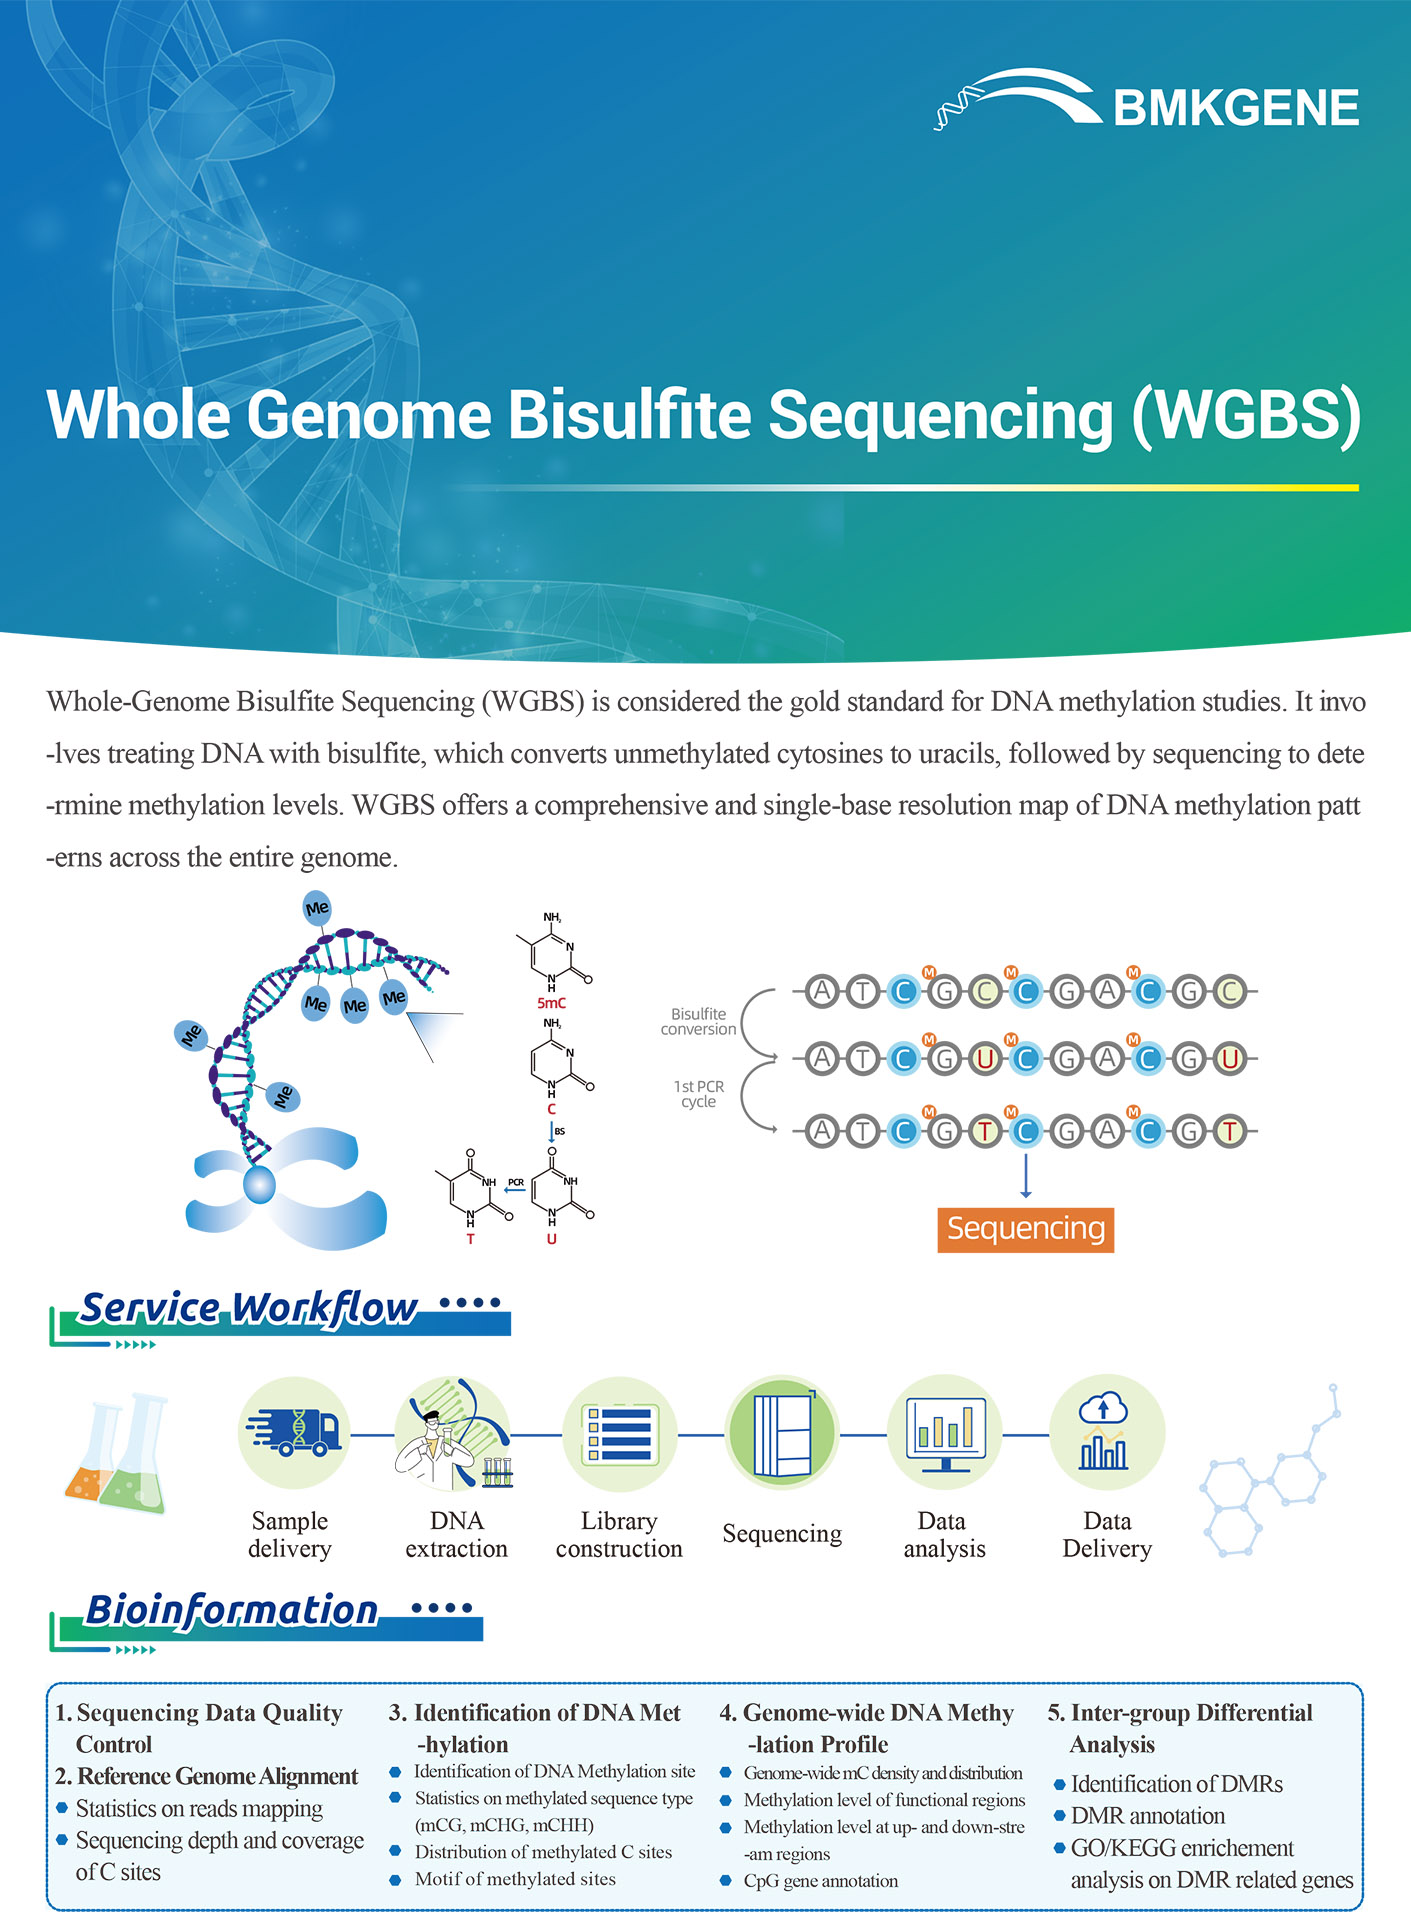 http://www.bmkgene.com/uploads/Whole-Genome-Bisulfite-Sequencing-WGBS-BMKGENE-2310.pdf